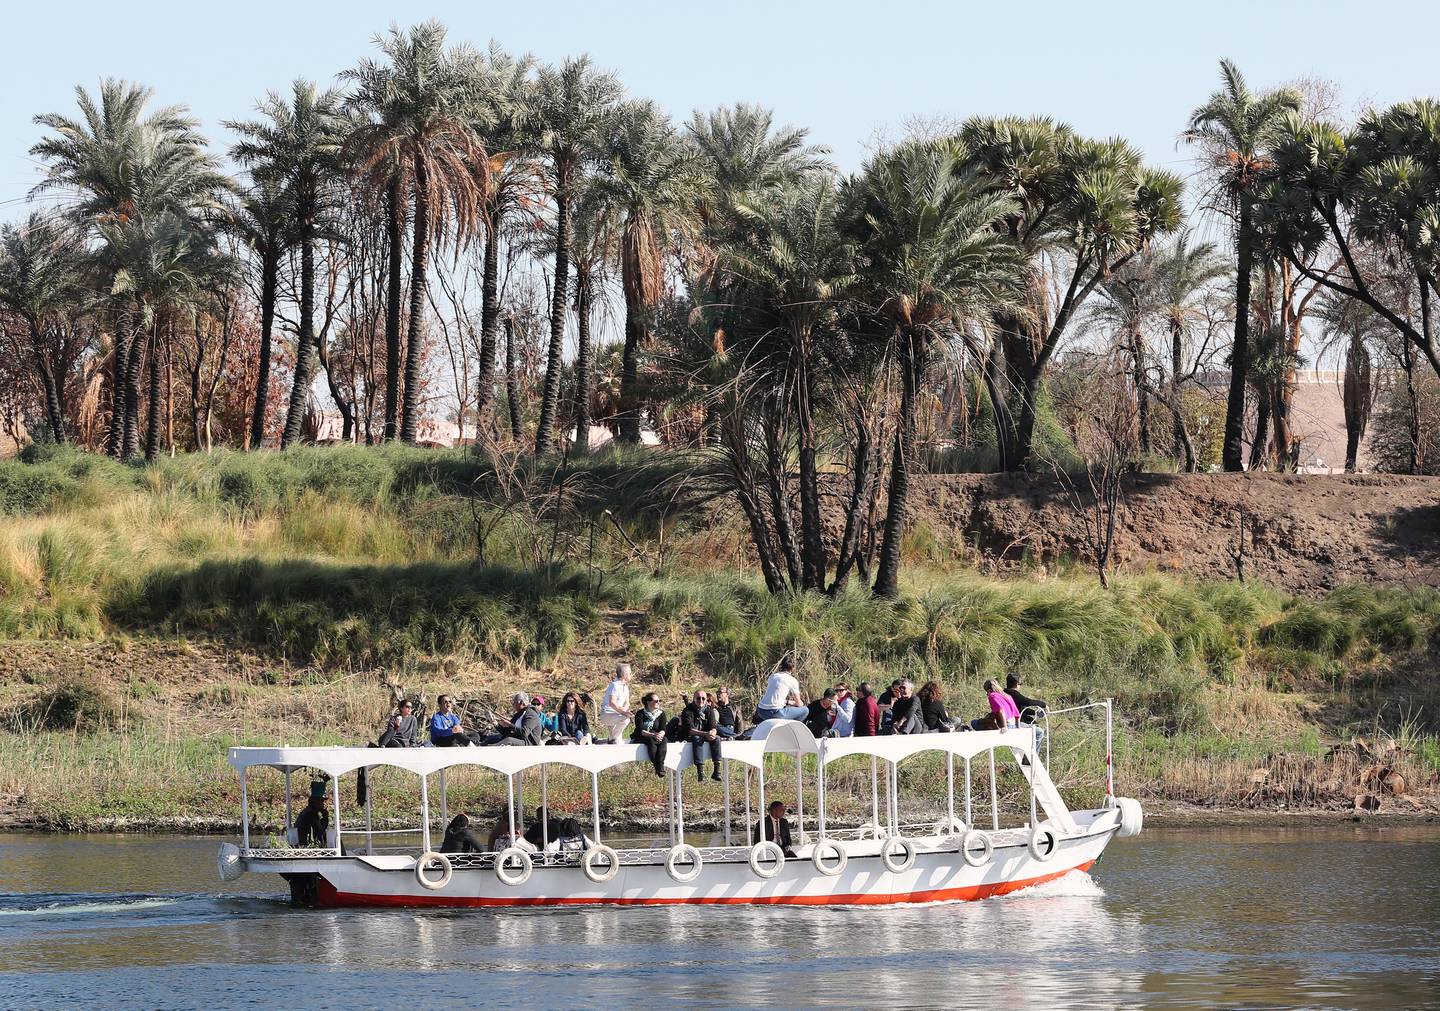 Bildet viser en elvebåt på Nilen. Folk i båten ser utover gresset langs elven. Palmene er grønne og frodige. Dette er i kontrast til ørkensanden som sees i det fjerne.